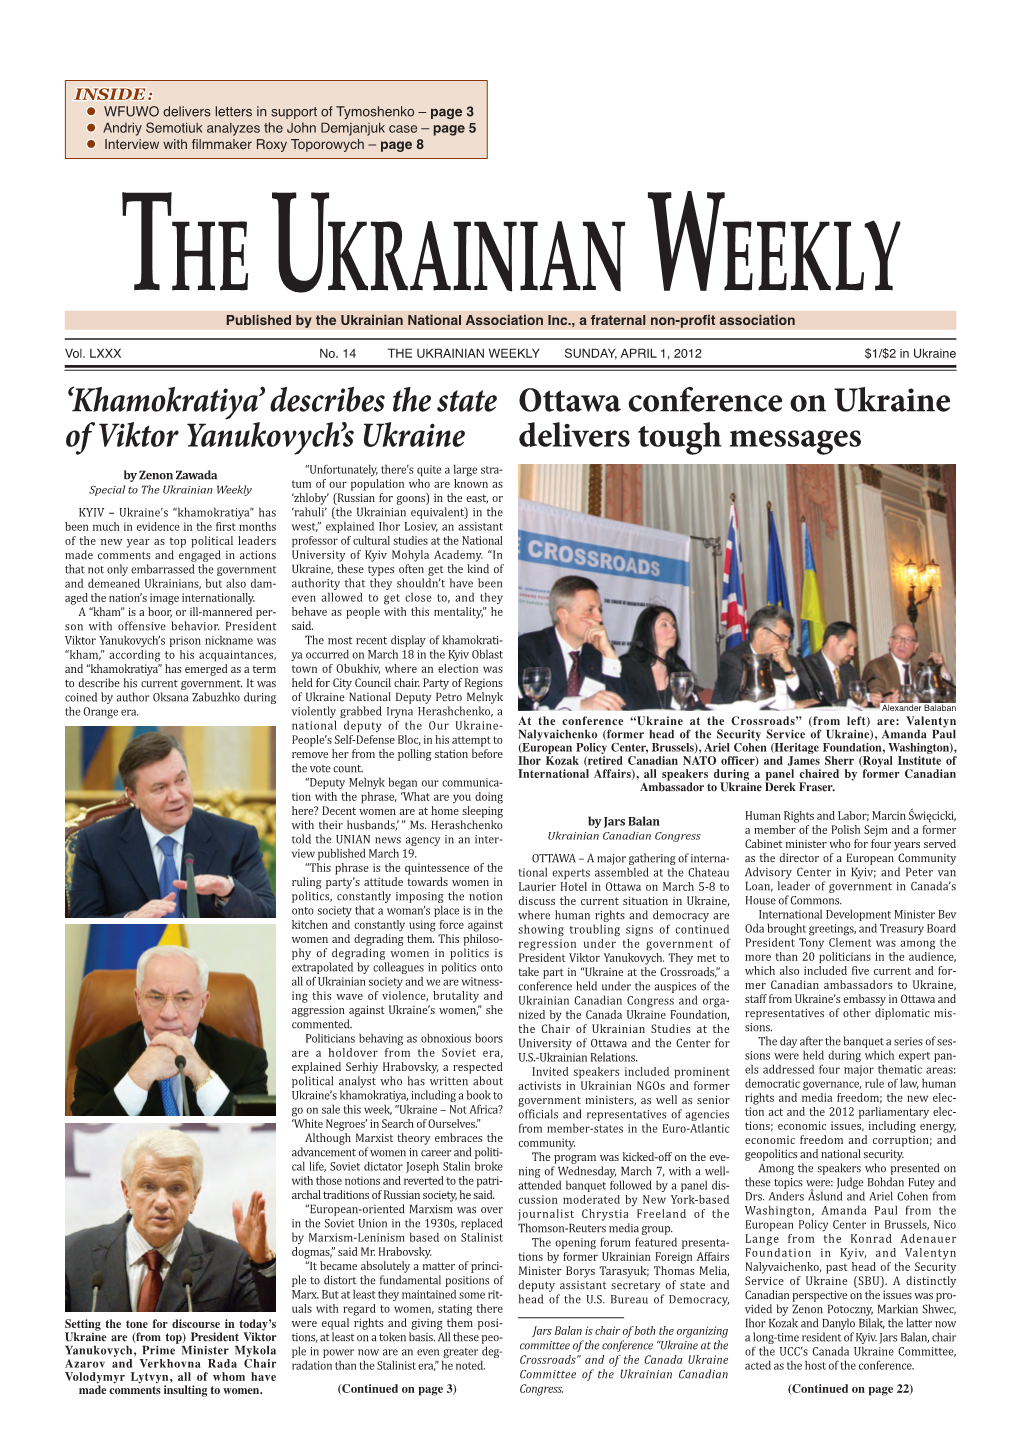 The Ukrainian Weekly 2012, No.14